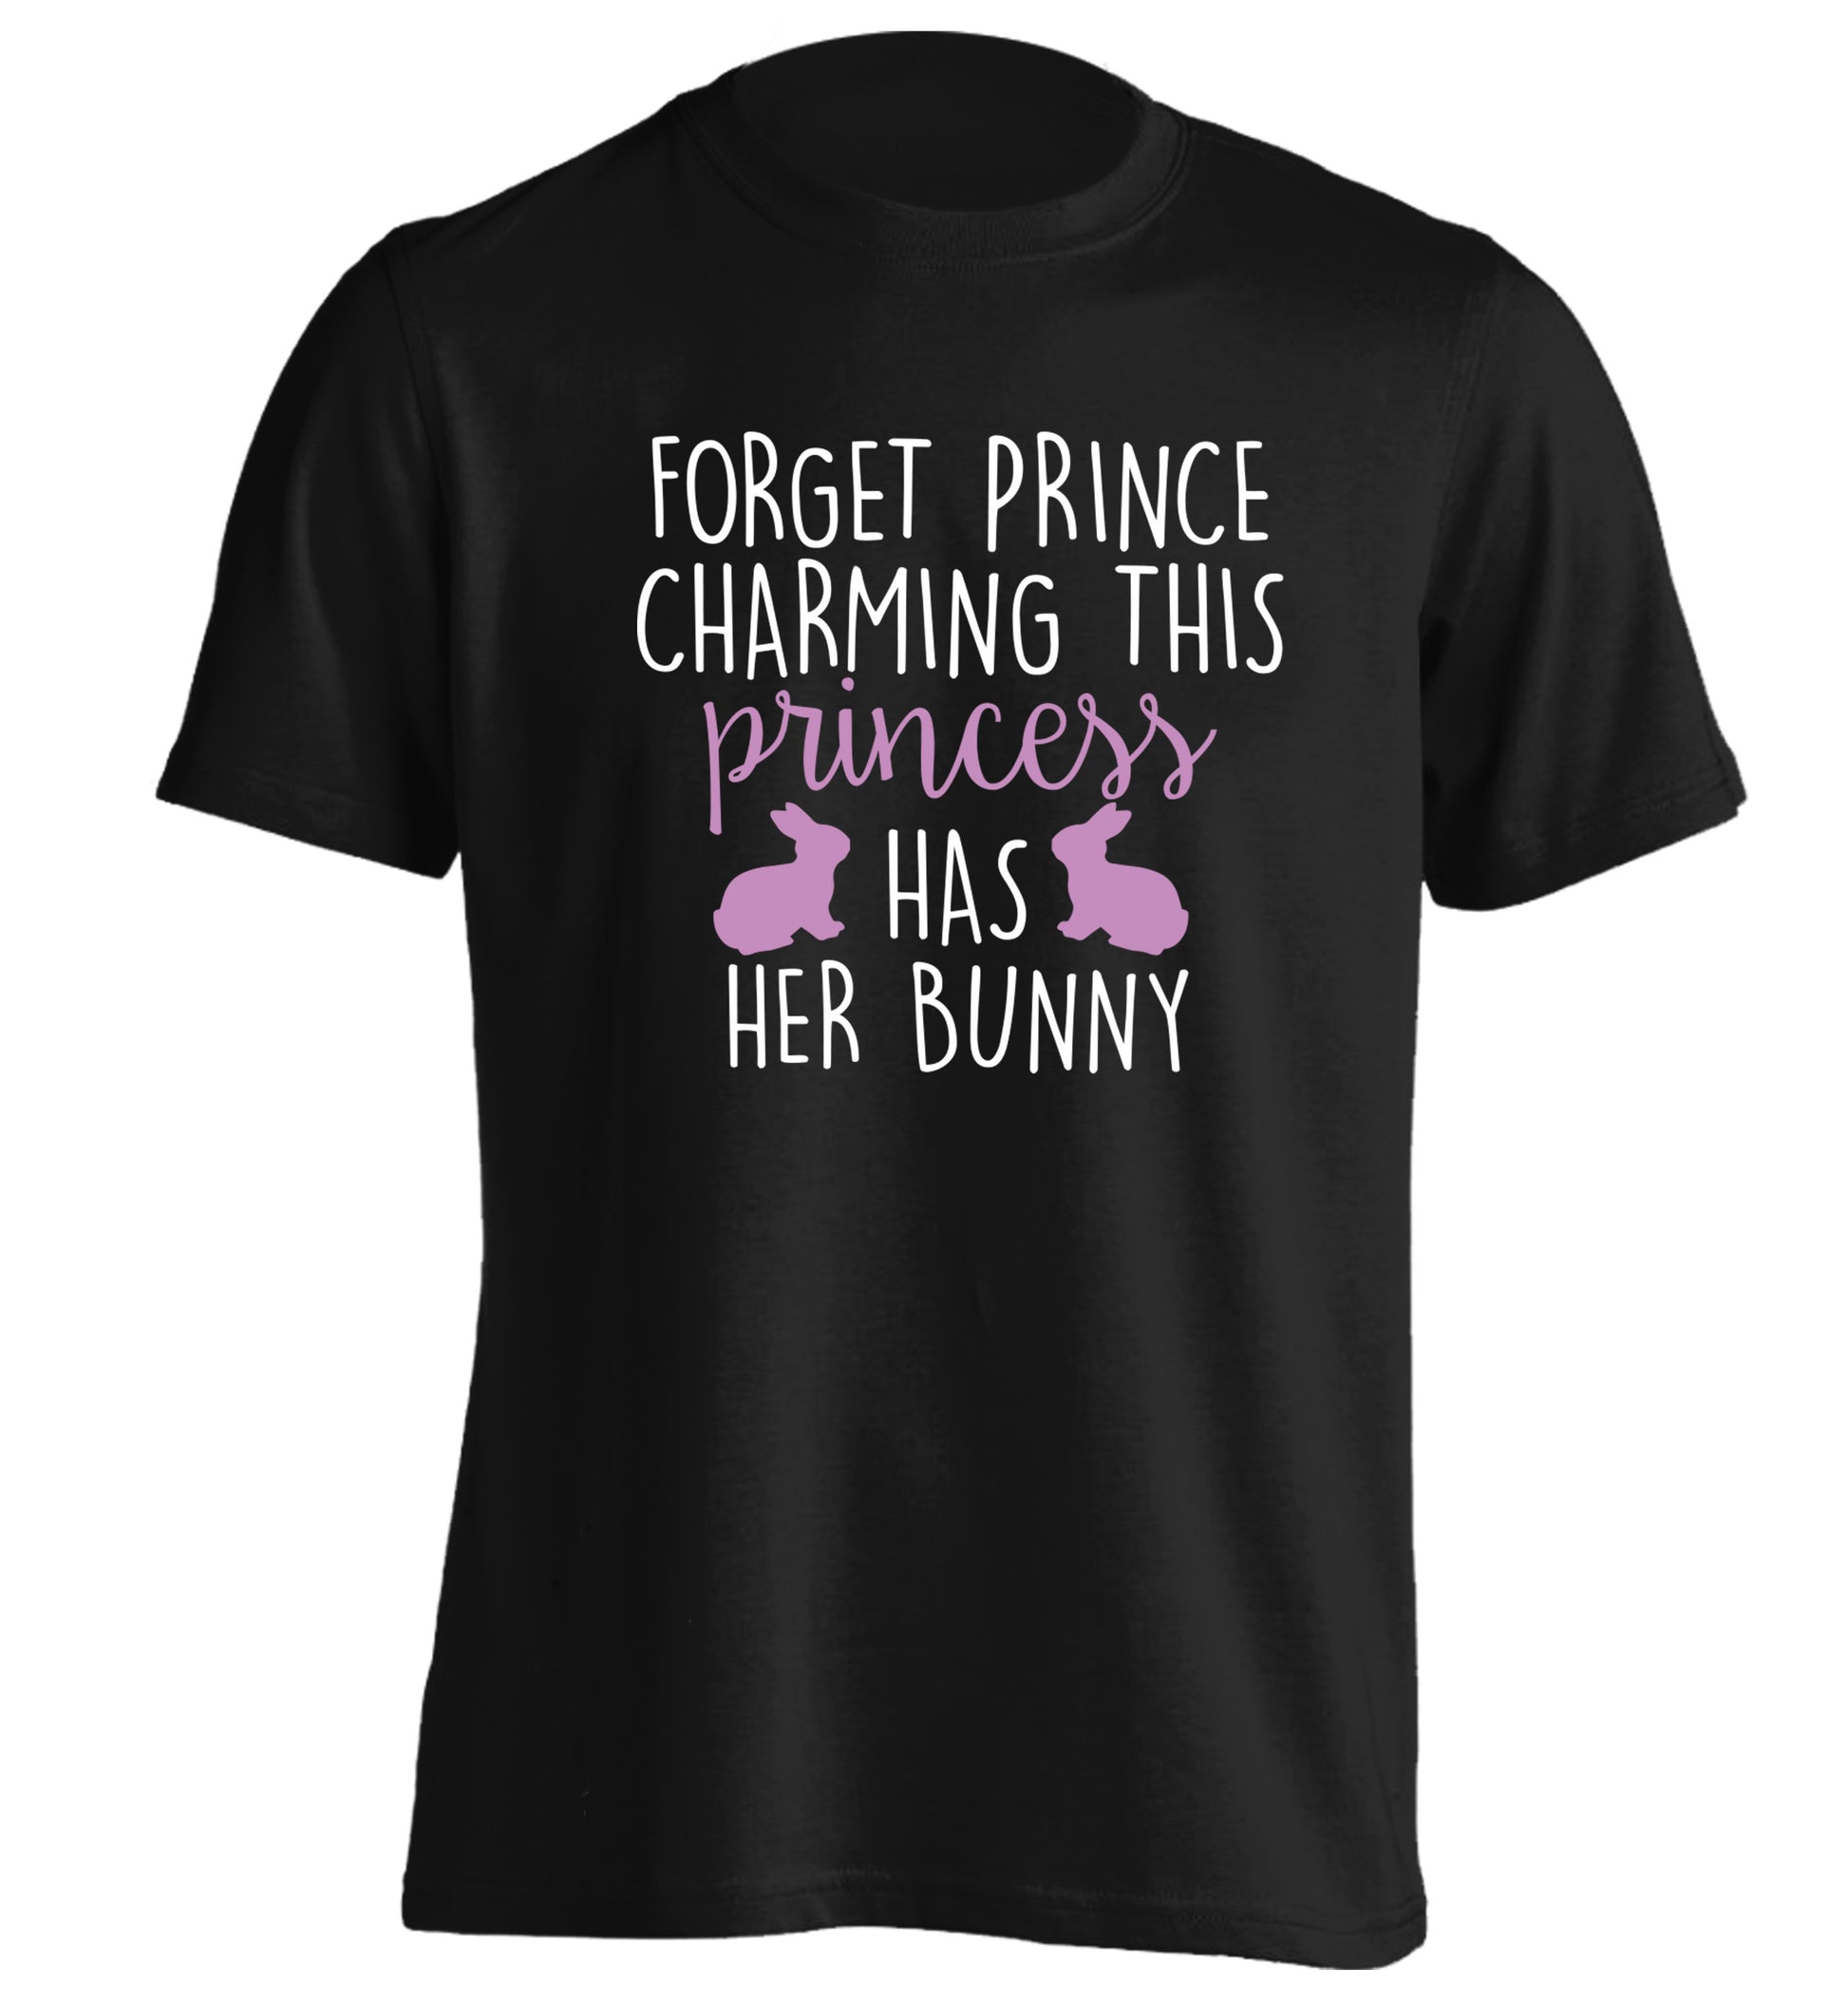 Forget prince charming this princess has her bunny adults unisex black Tshirt 2XL